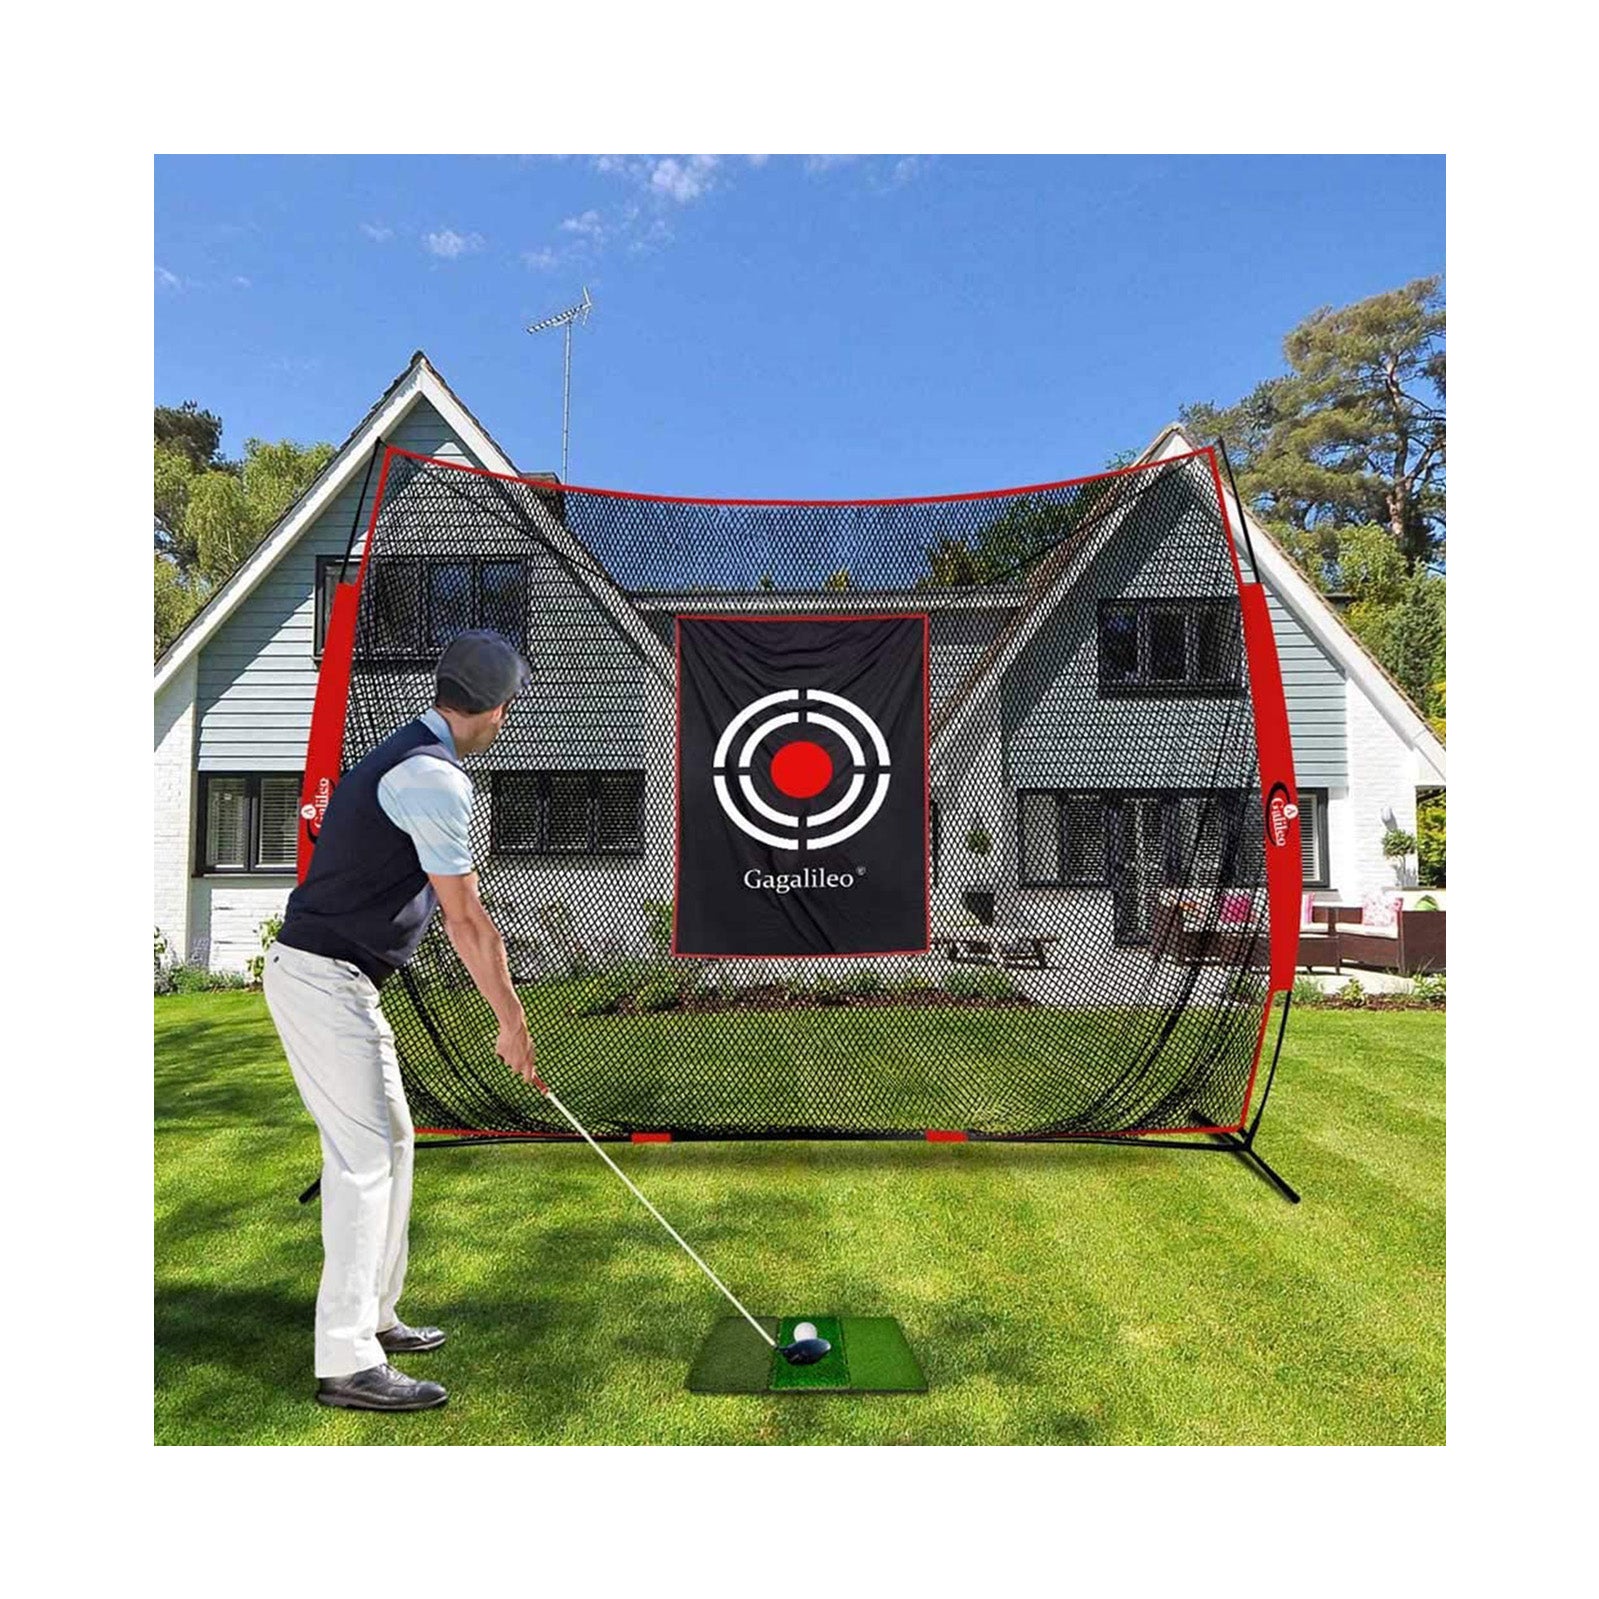 Redes de golf Red de práctica de golf Redes de golpeo de golf Campo de prácticas de golf para uso en interiores| 10X8FT| deportes galileo 